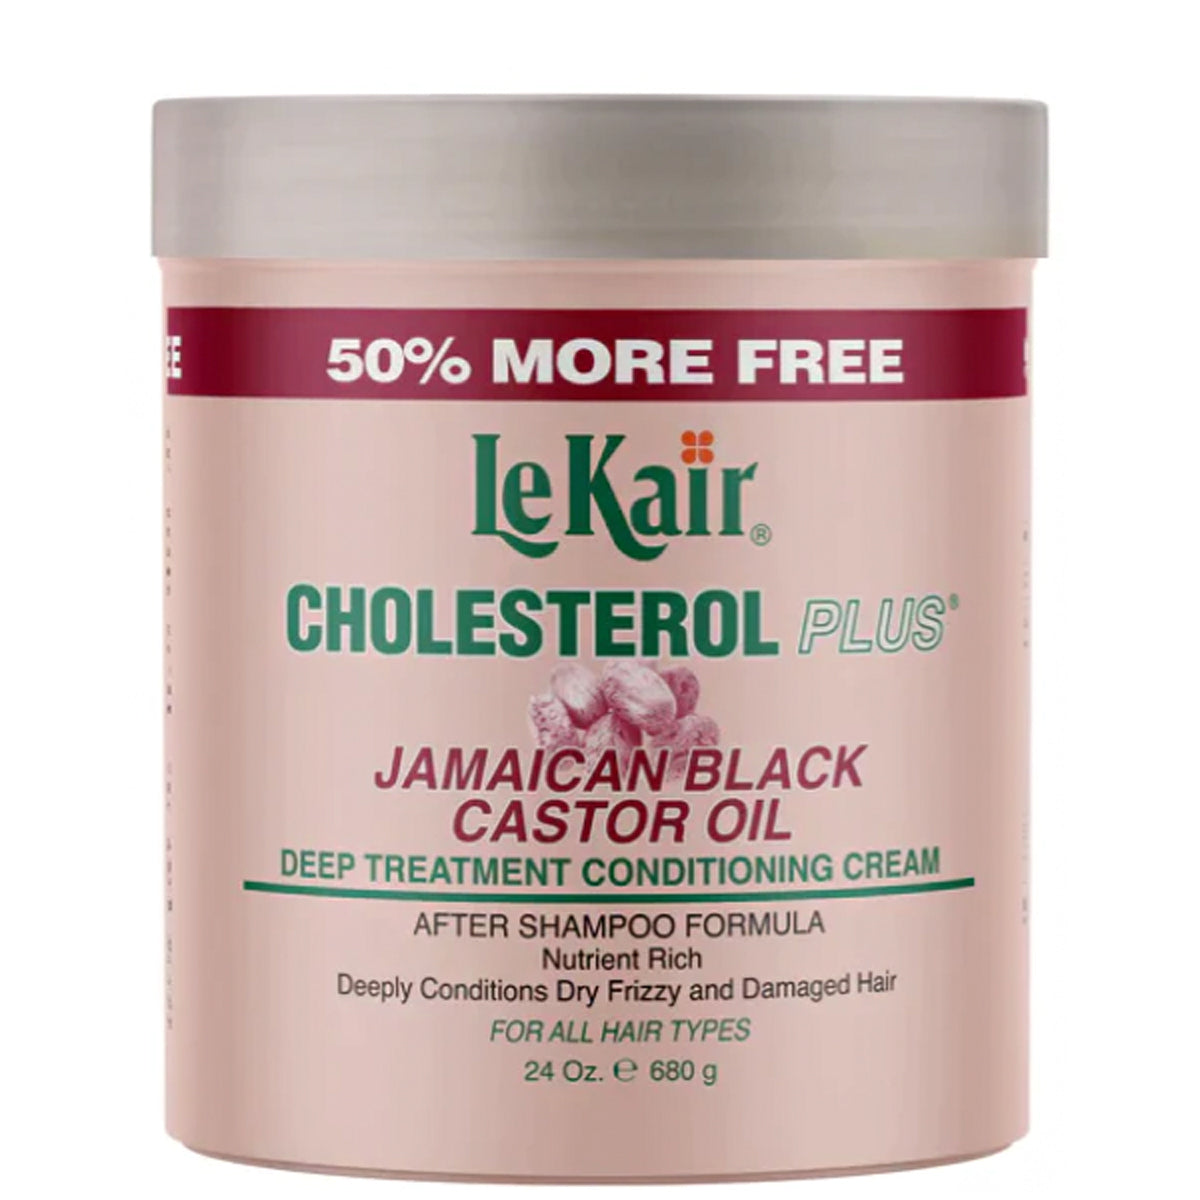 LeKair Cholesterol Plus Jamaican Black Castor Oil Deep Treatment Conditioning Cream 24oz